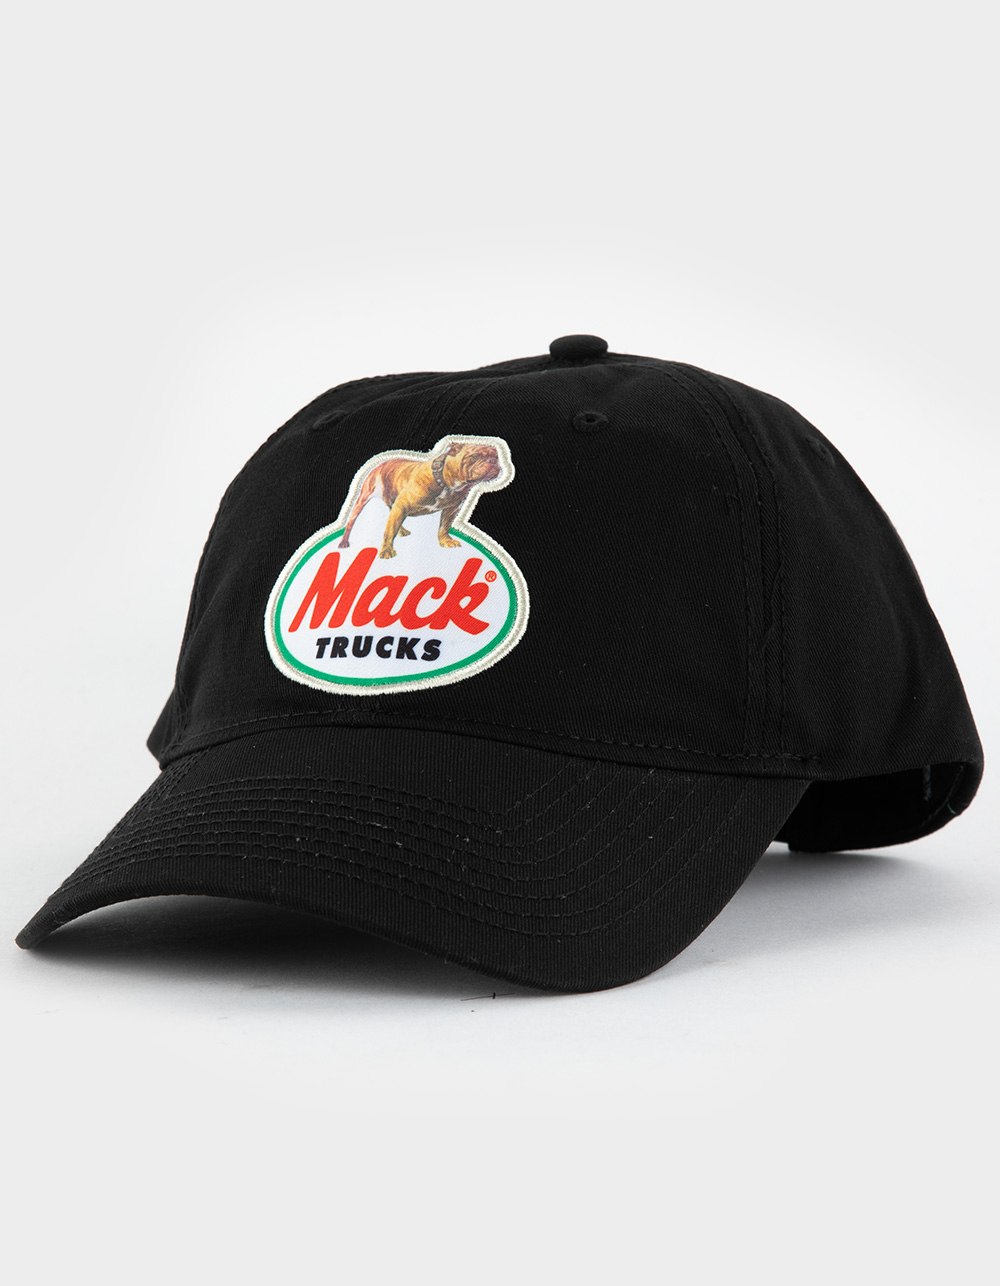 MACK Trucks Mens Snapback Hat - BLACK COMBO